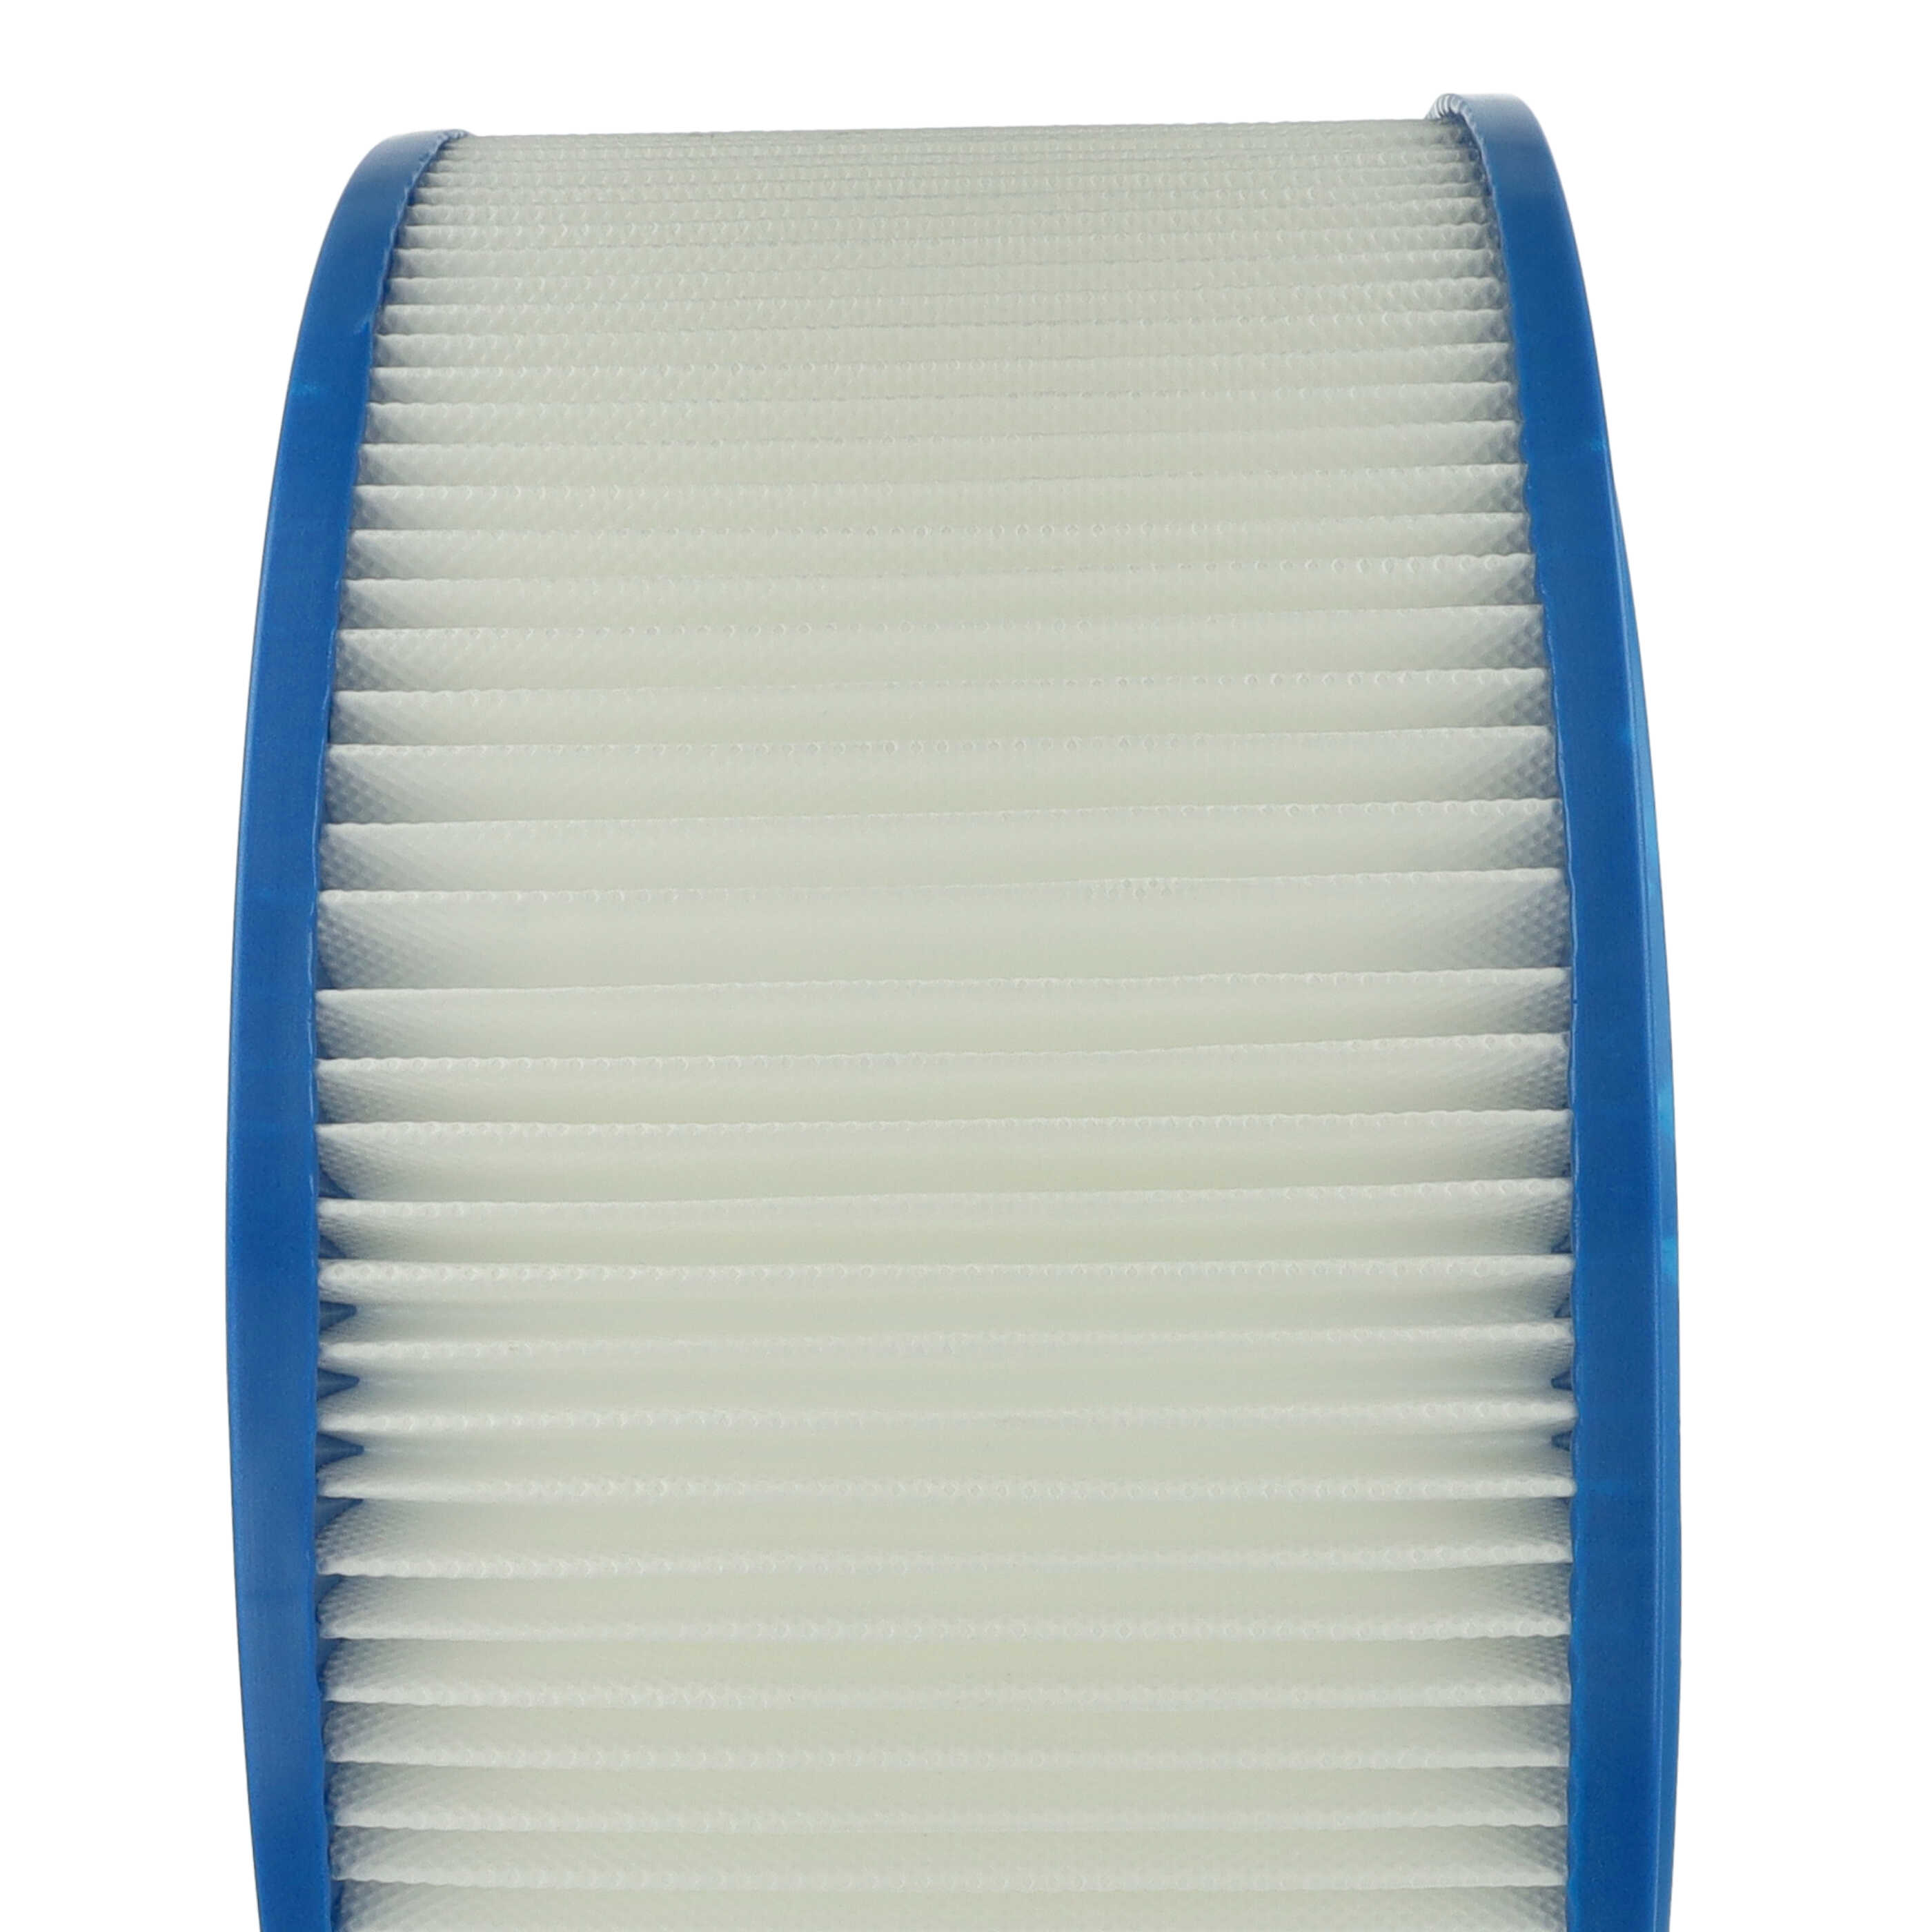 Filtro reemplaza Hilti 371145 para aspiradora filtro de cartucho